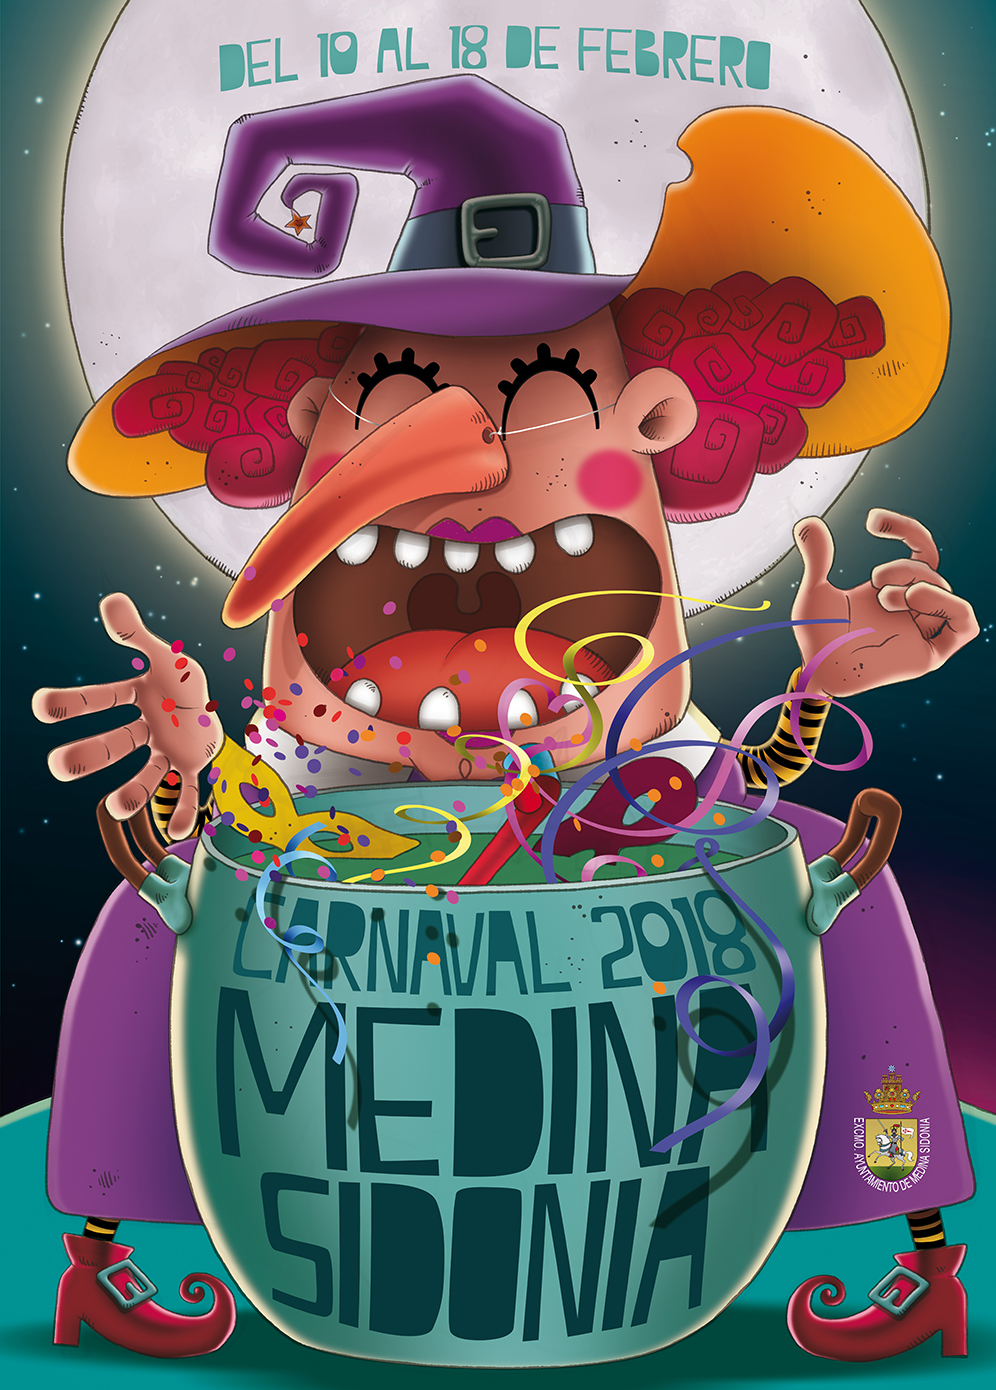 Carnaval de Medina Sidonia 2018